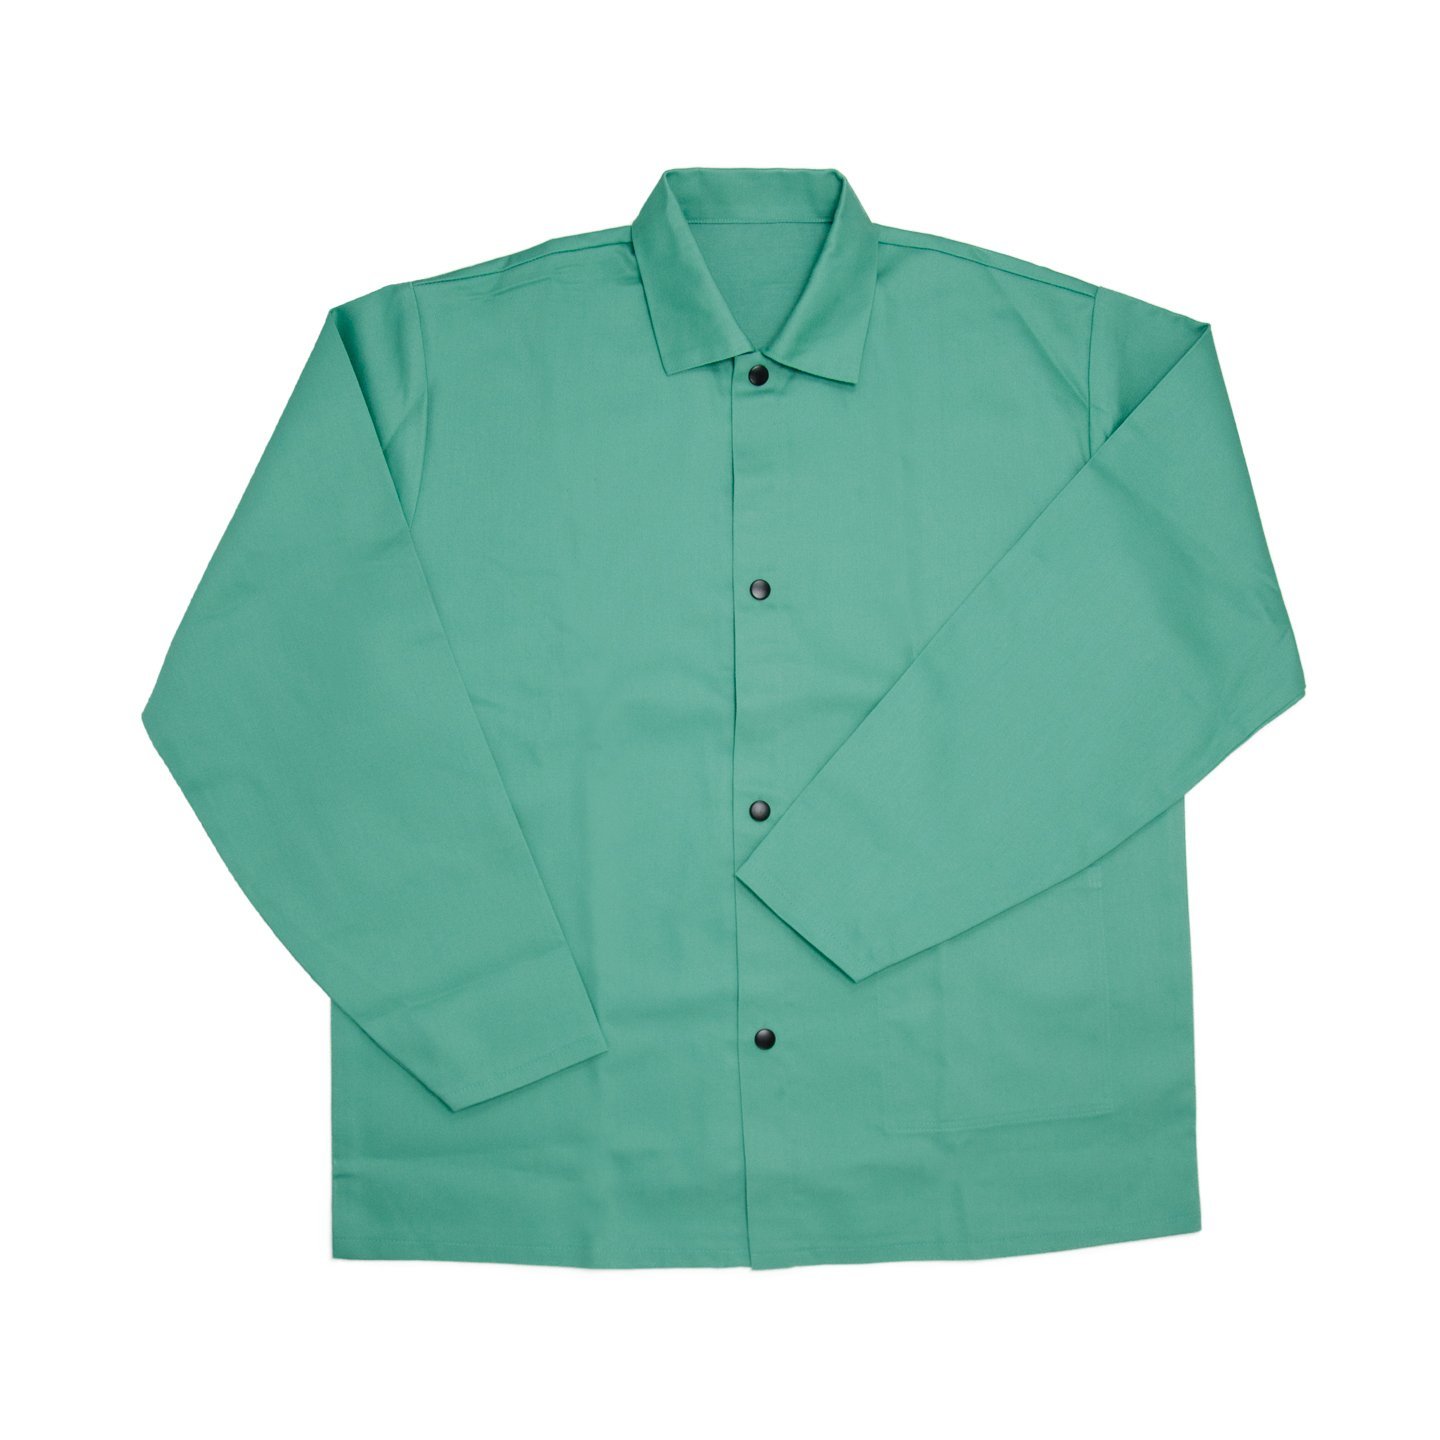 IRONCAT 7050/L Irontex FR Cotton Jacket, 30